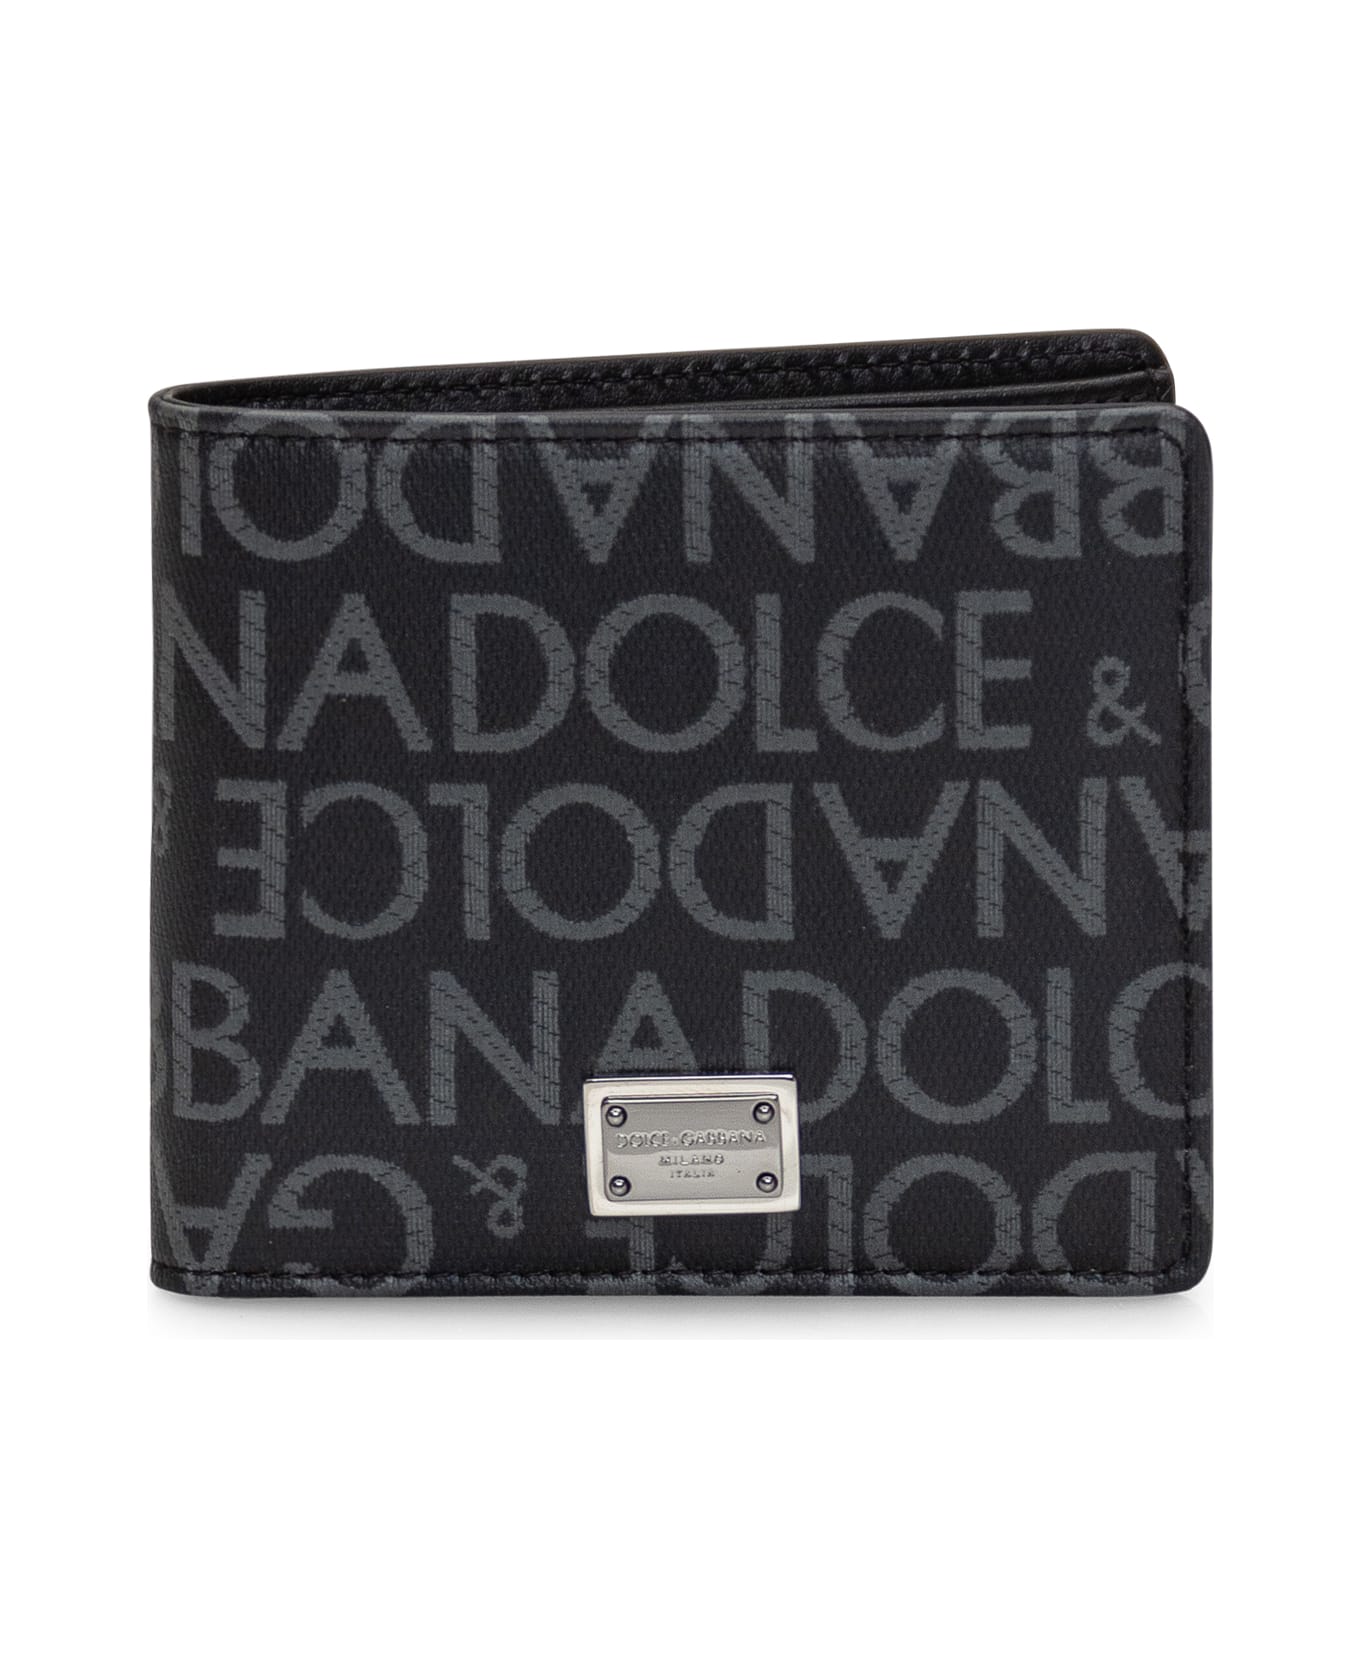 Dolce & Gabbana Wallet With Logo - NERO/GRIGIO